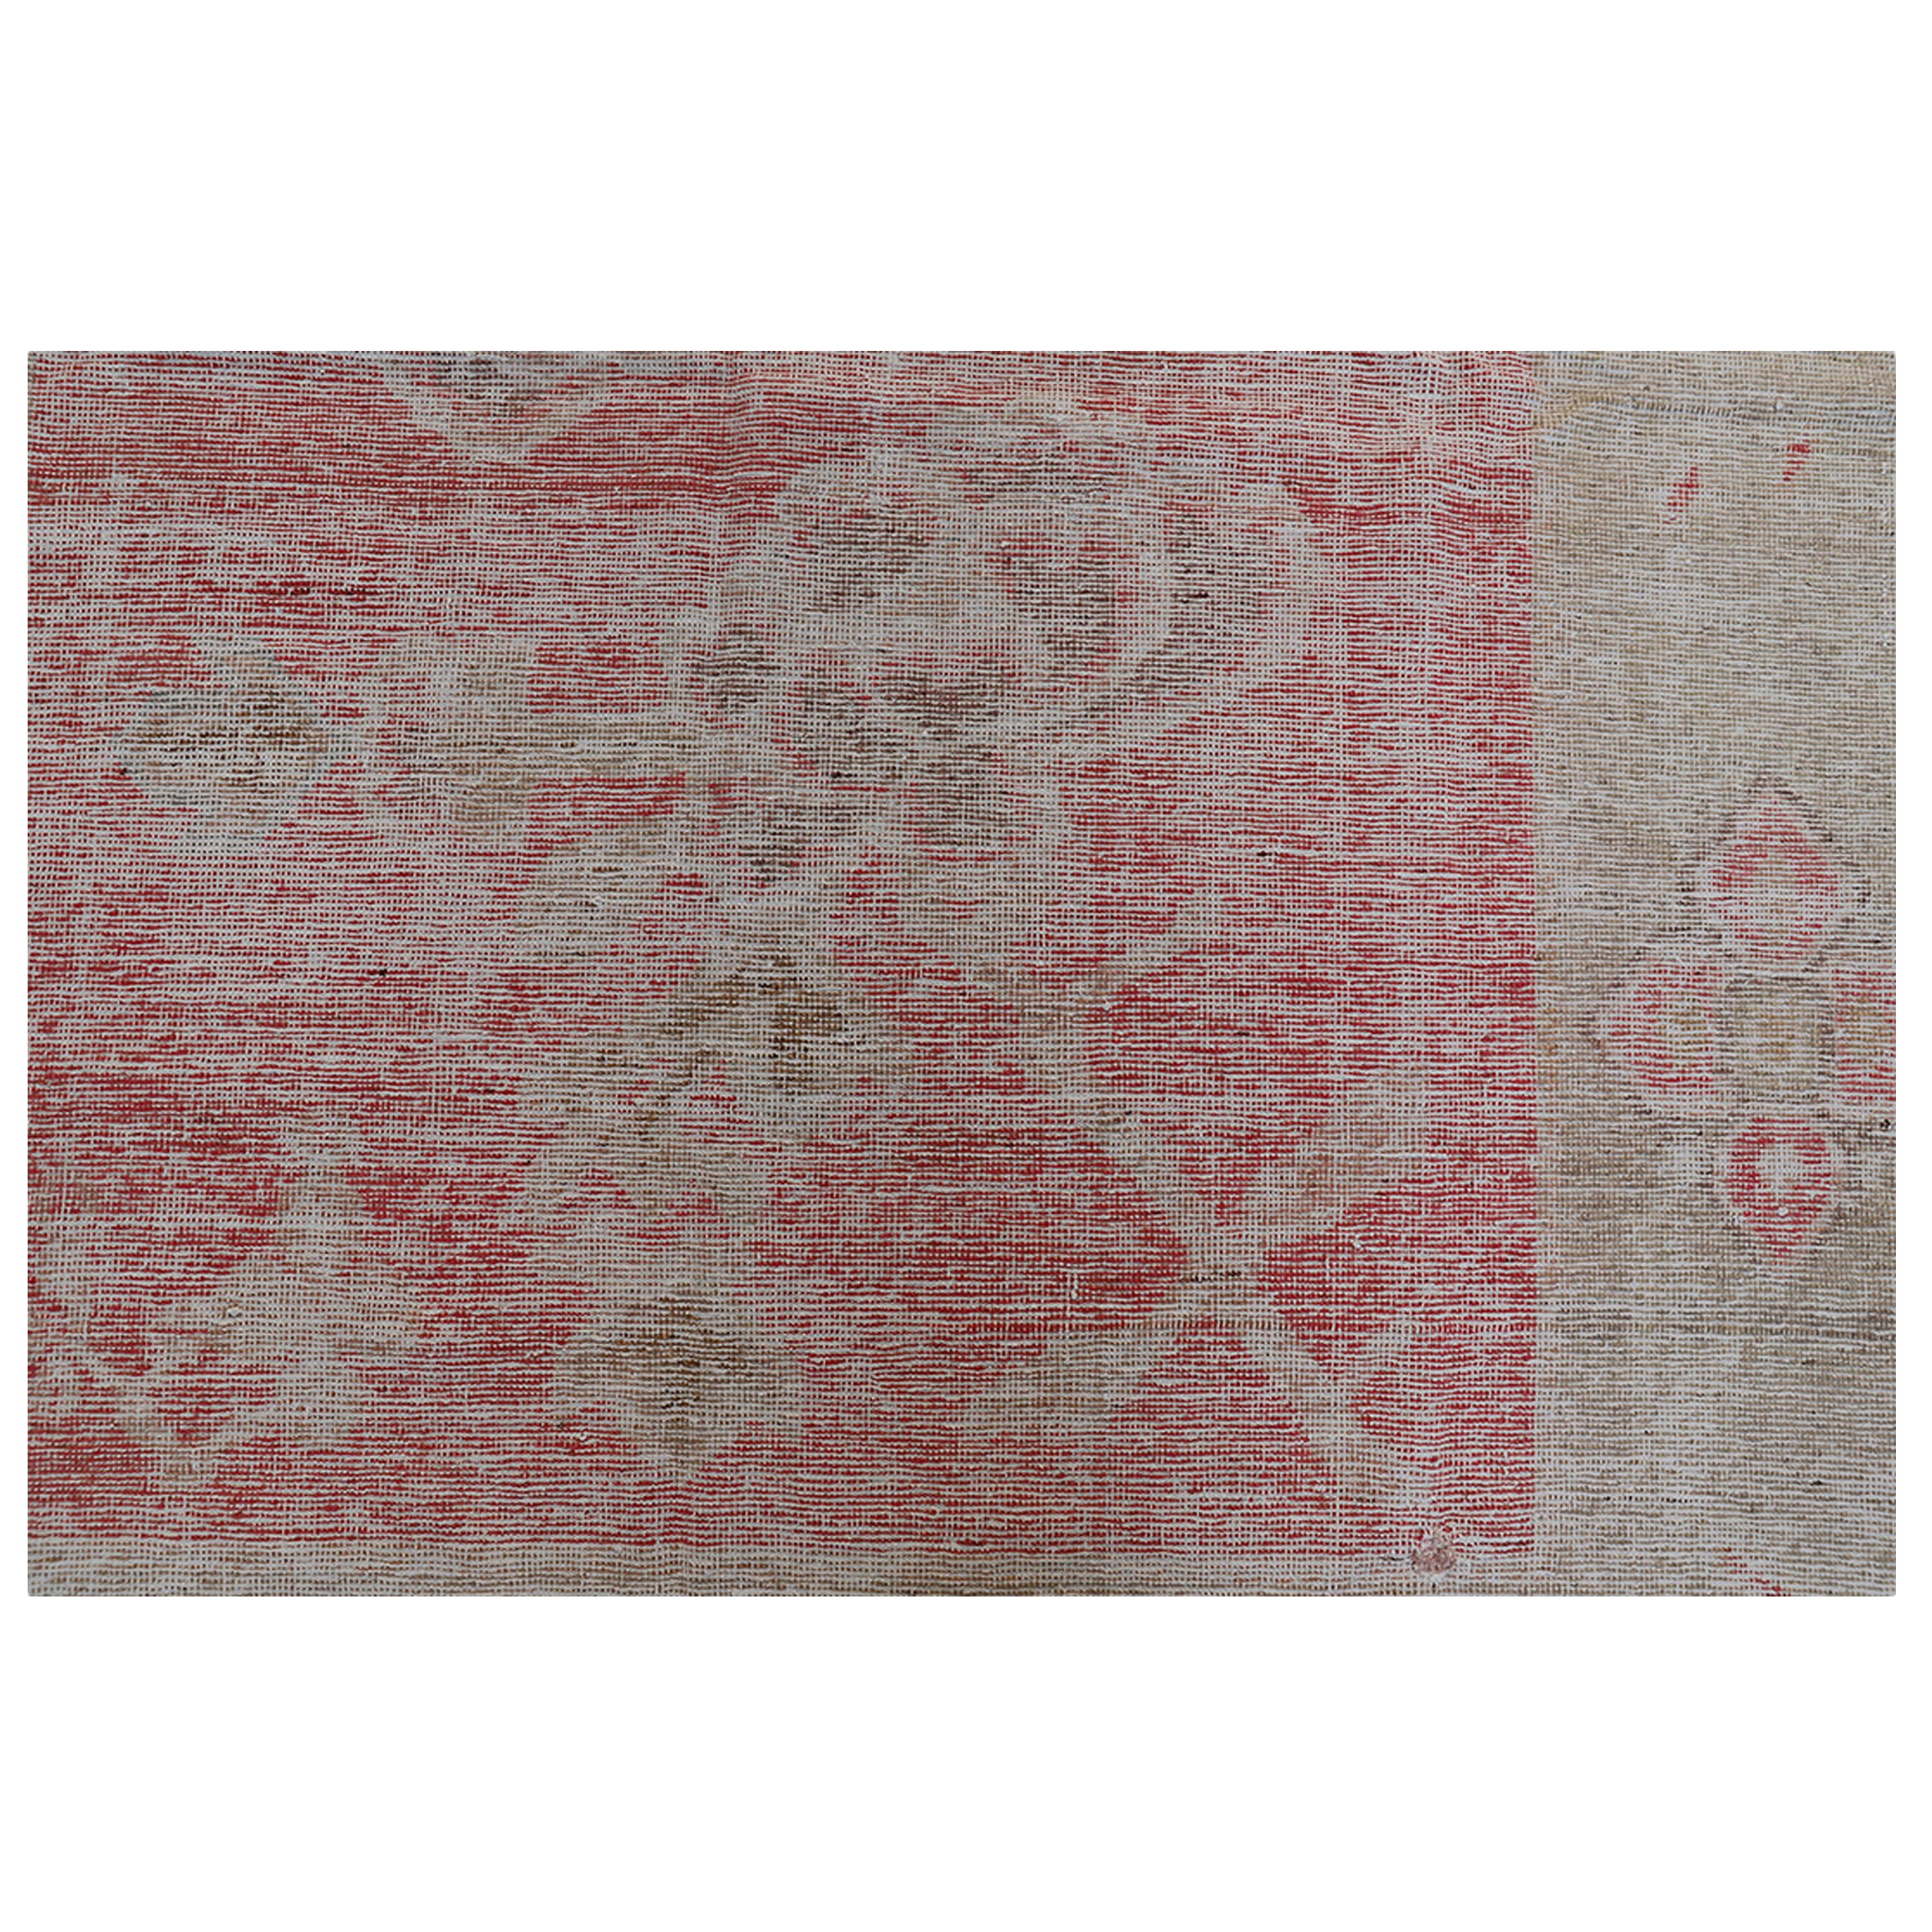 Khotan abc carpet Pink and Grey Vintage Wool Cotton Blend Rug - 4'10